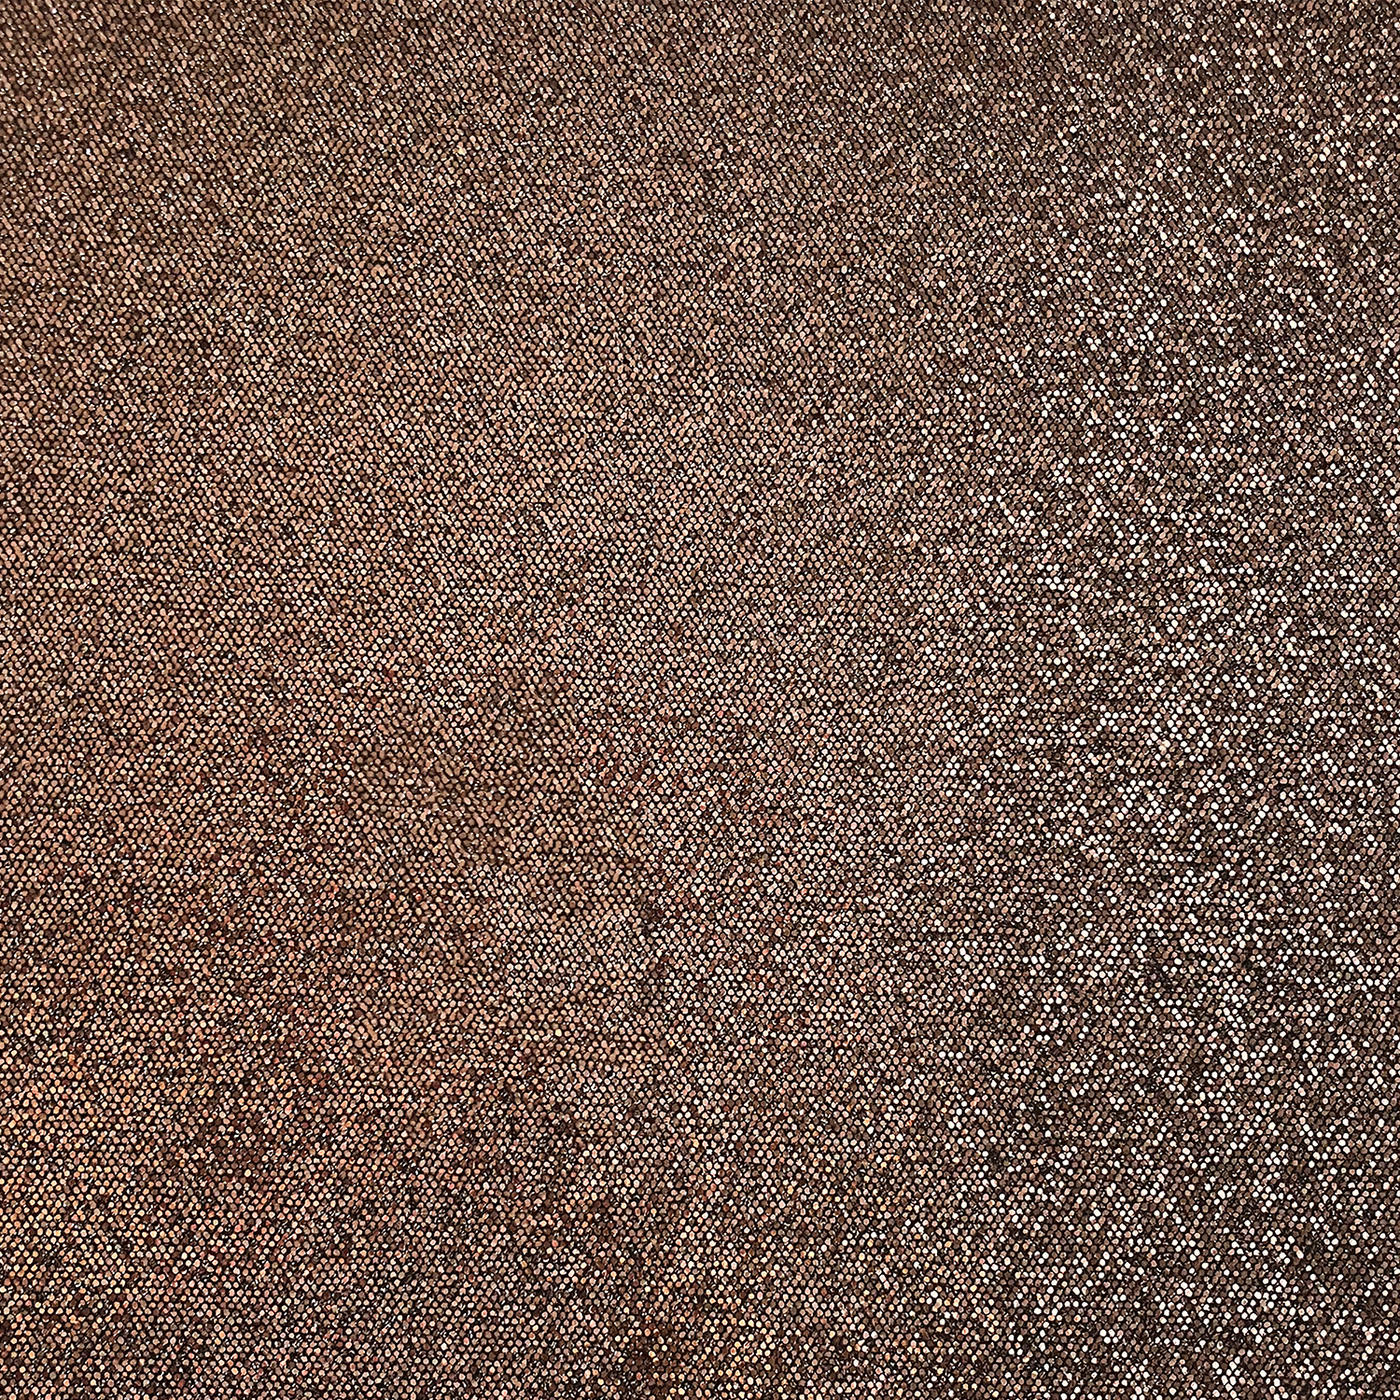 CHOCOLATE Sequin Glitter Cardstock - brown geometric glitter